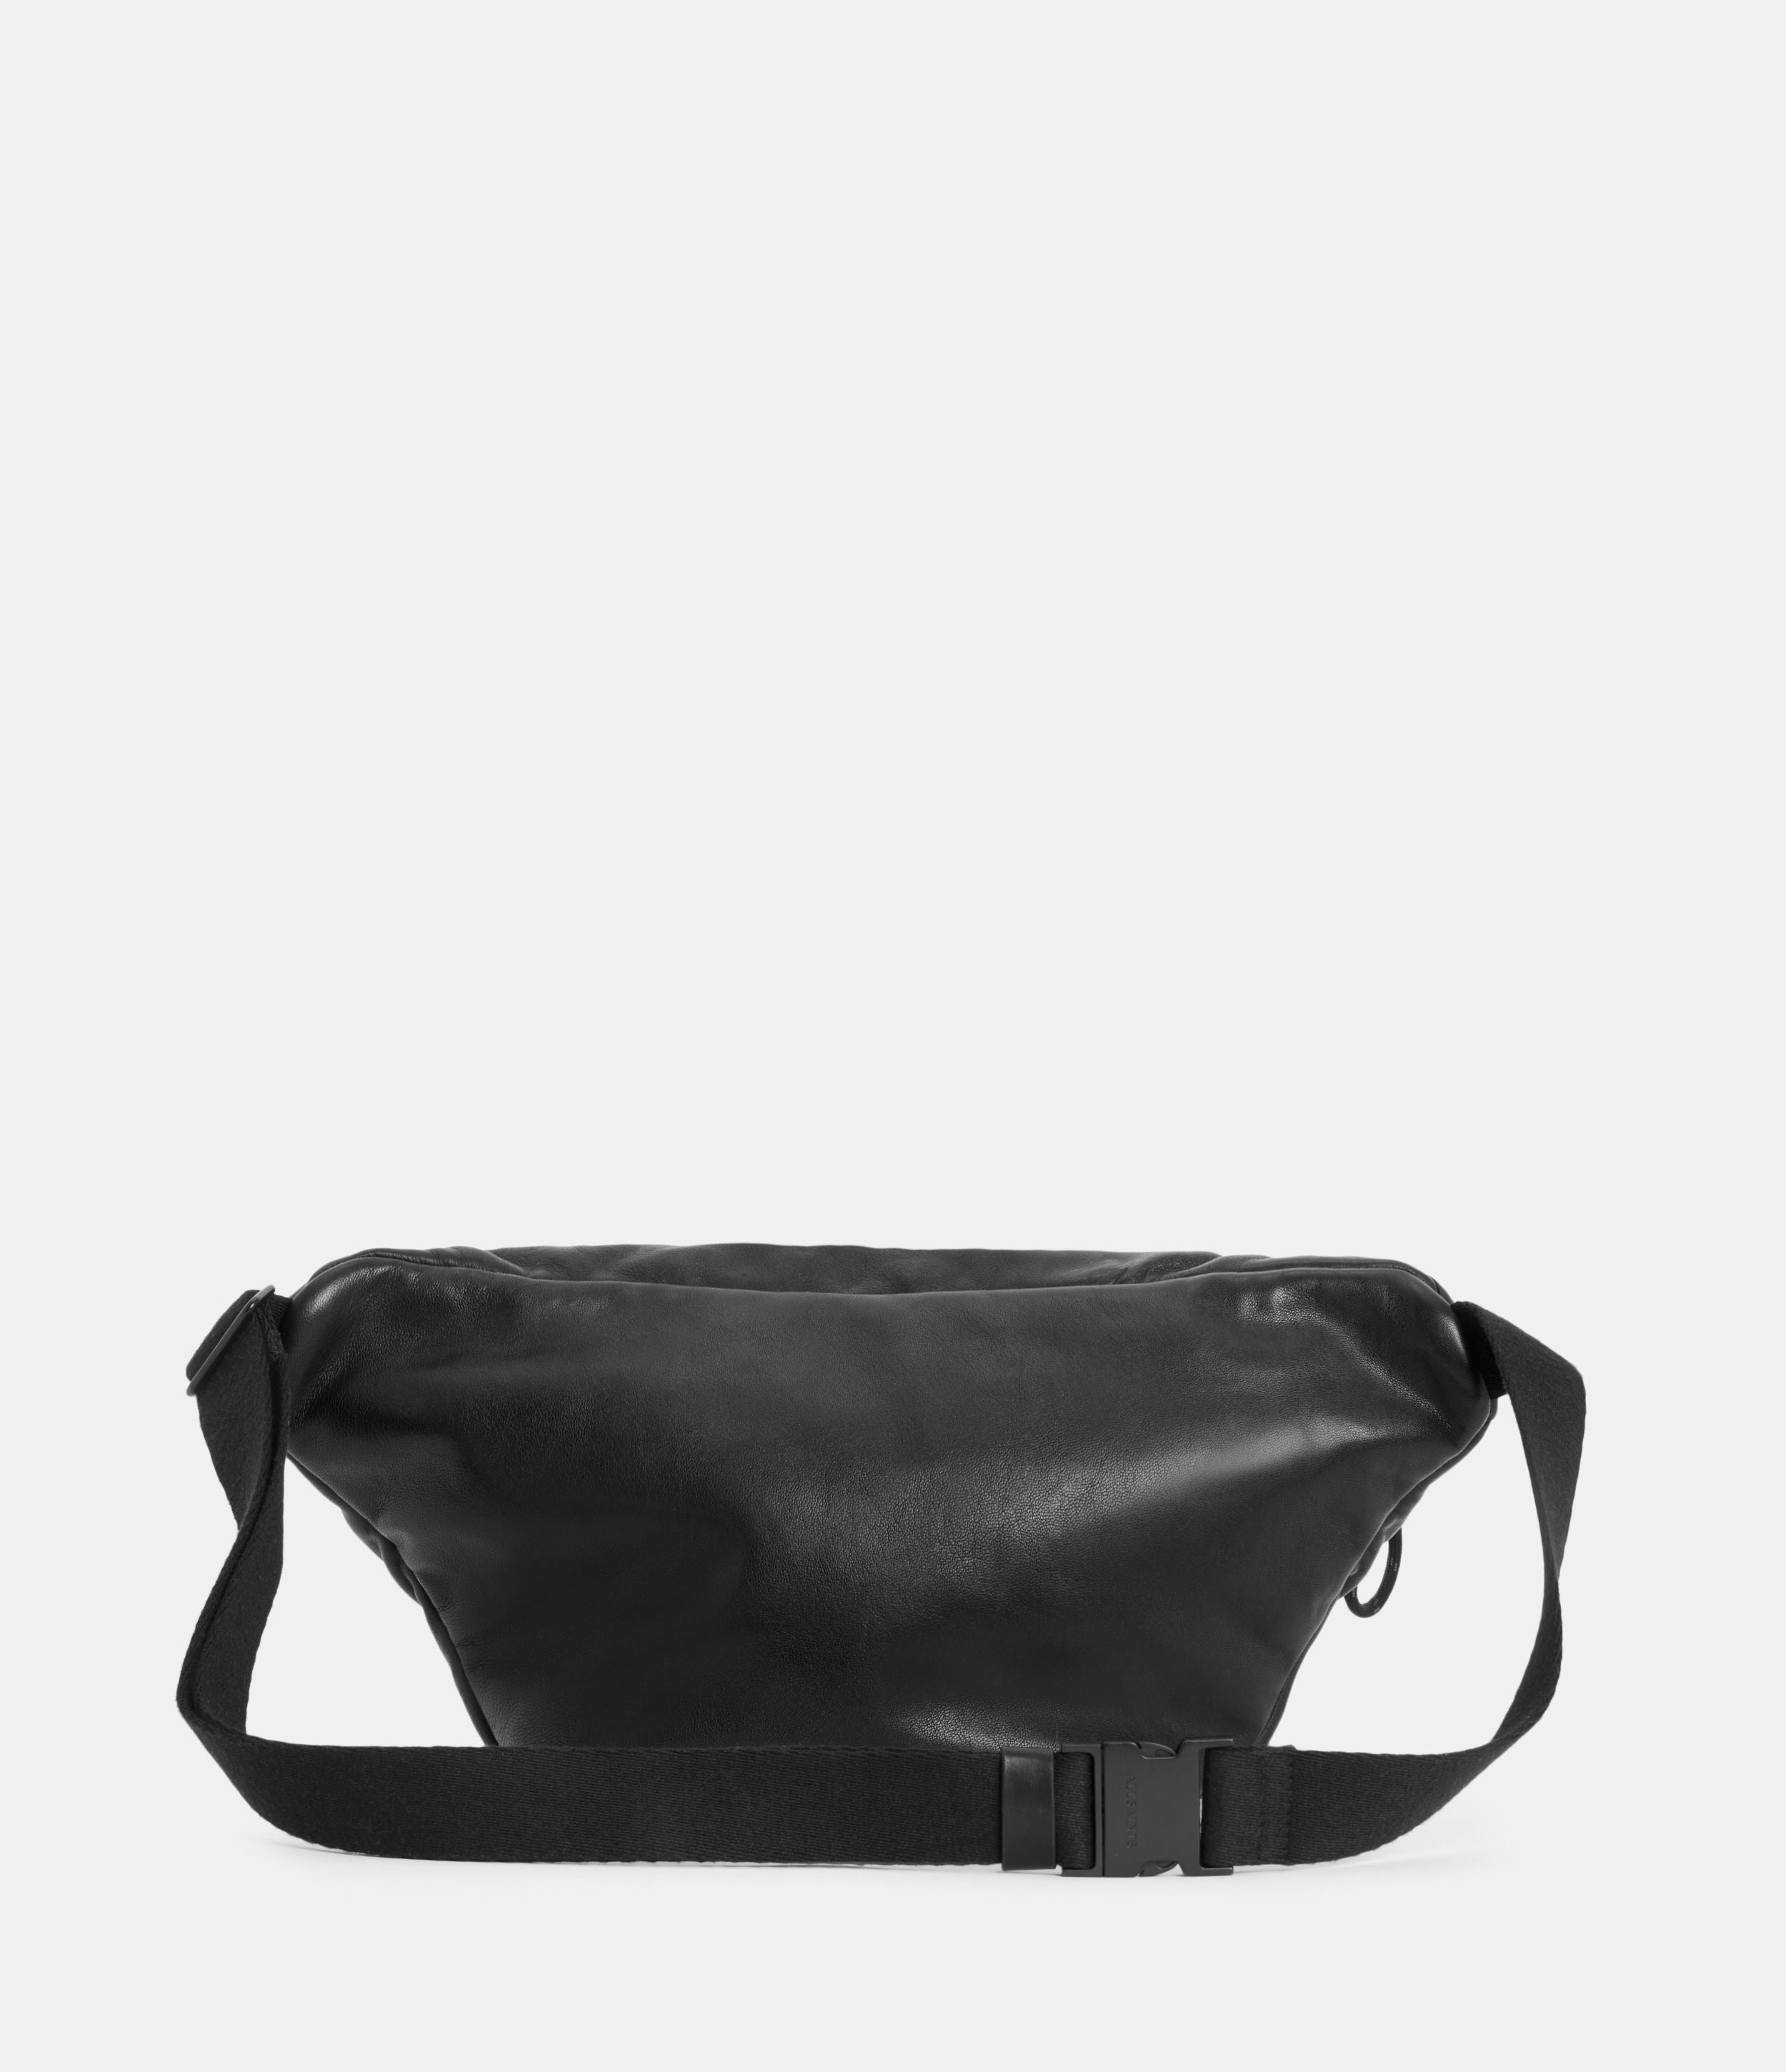 Ronin Leather Bum bag